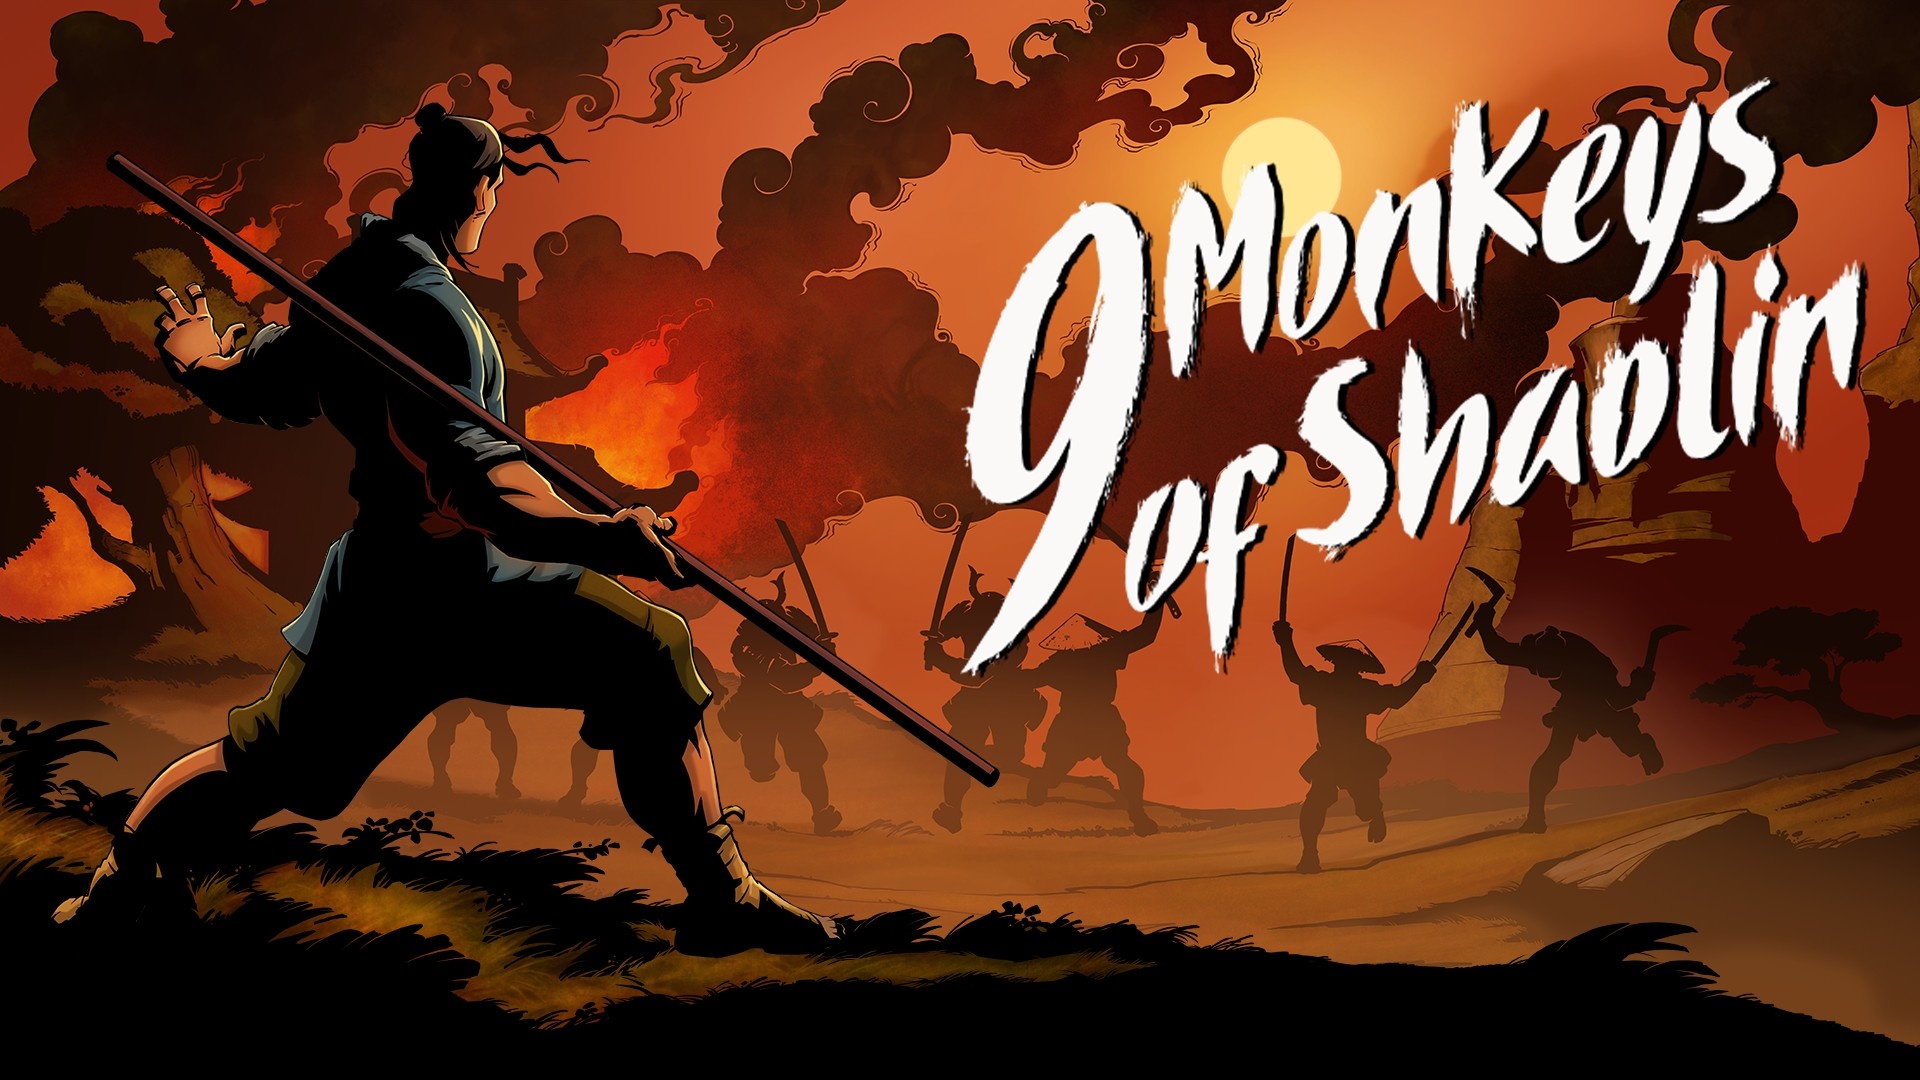 Game 9 Monkeys of Shaolin - Tựa game beat 'em up hấp dẫn